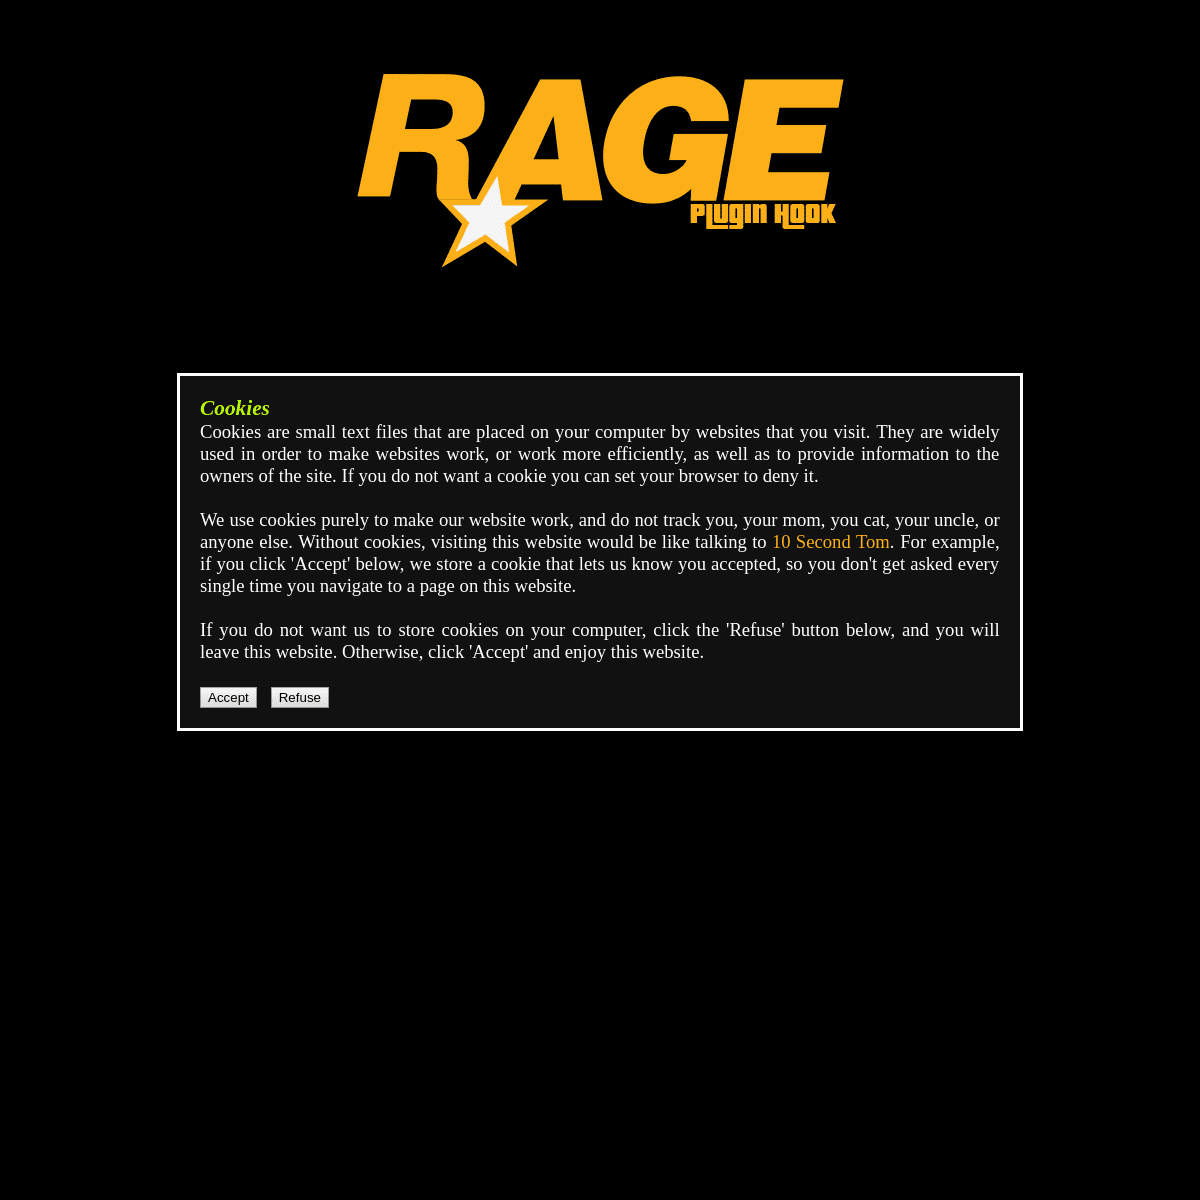 rage plugin hook latest version